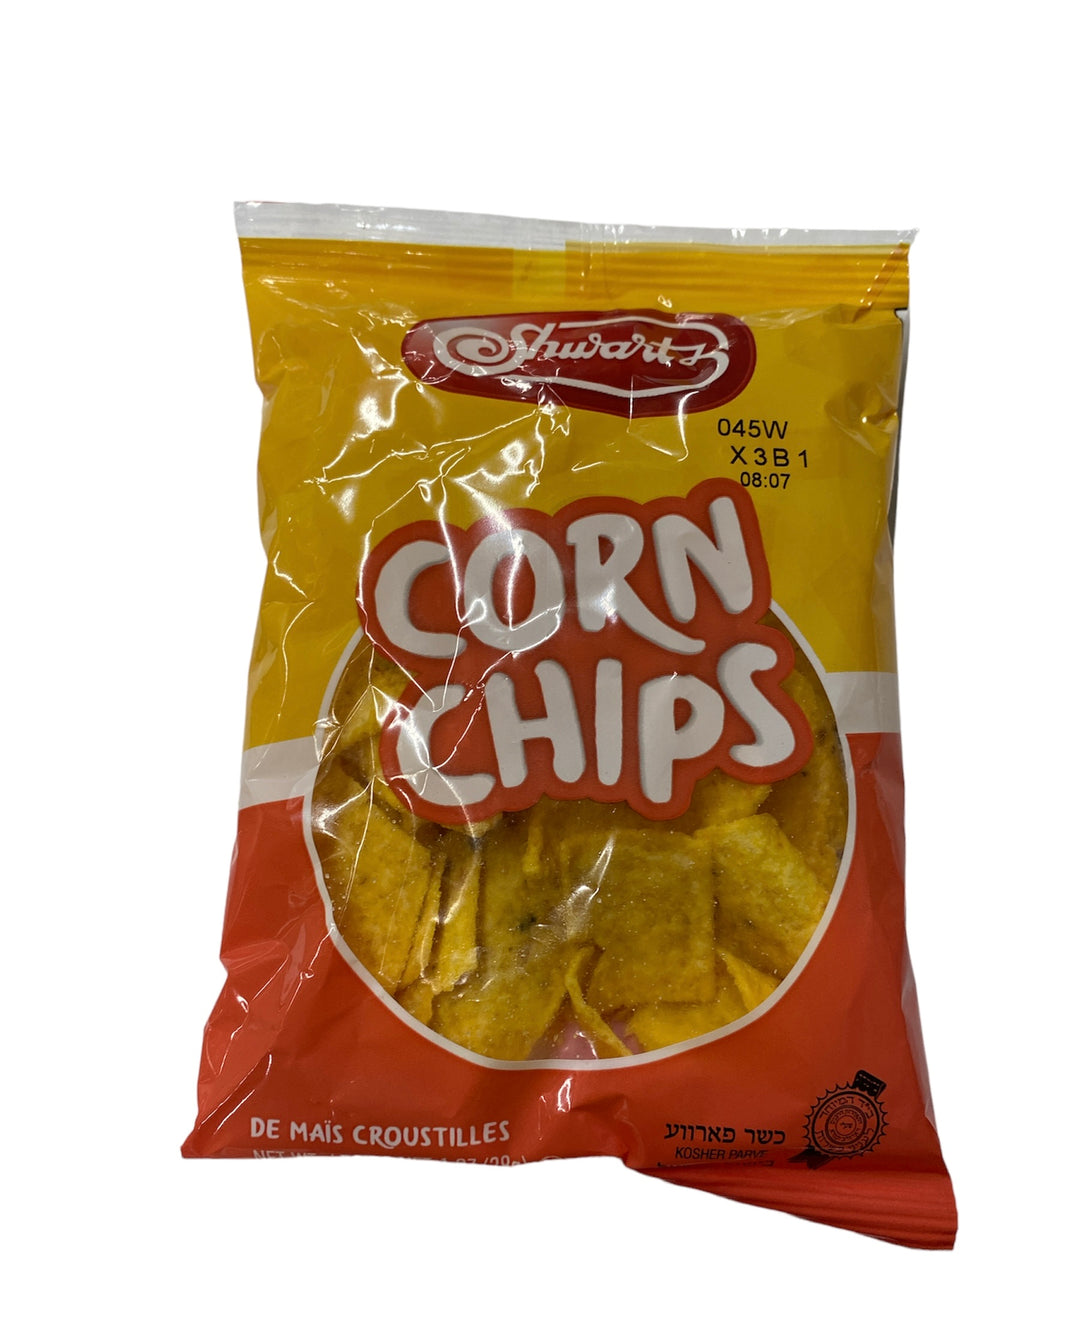 Shwartz, Corn Chips 1 Oz